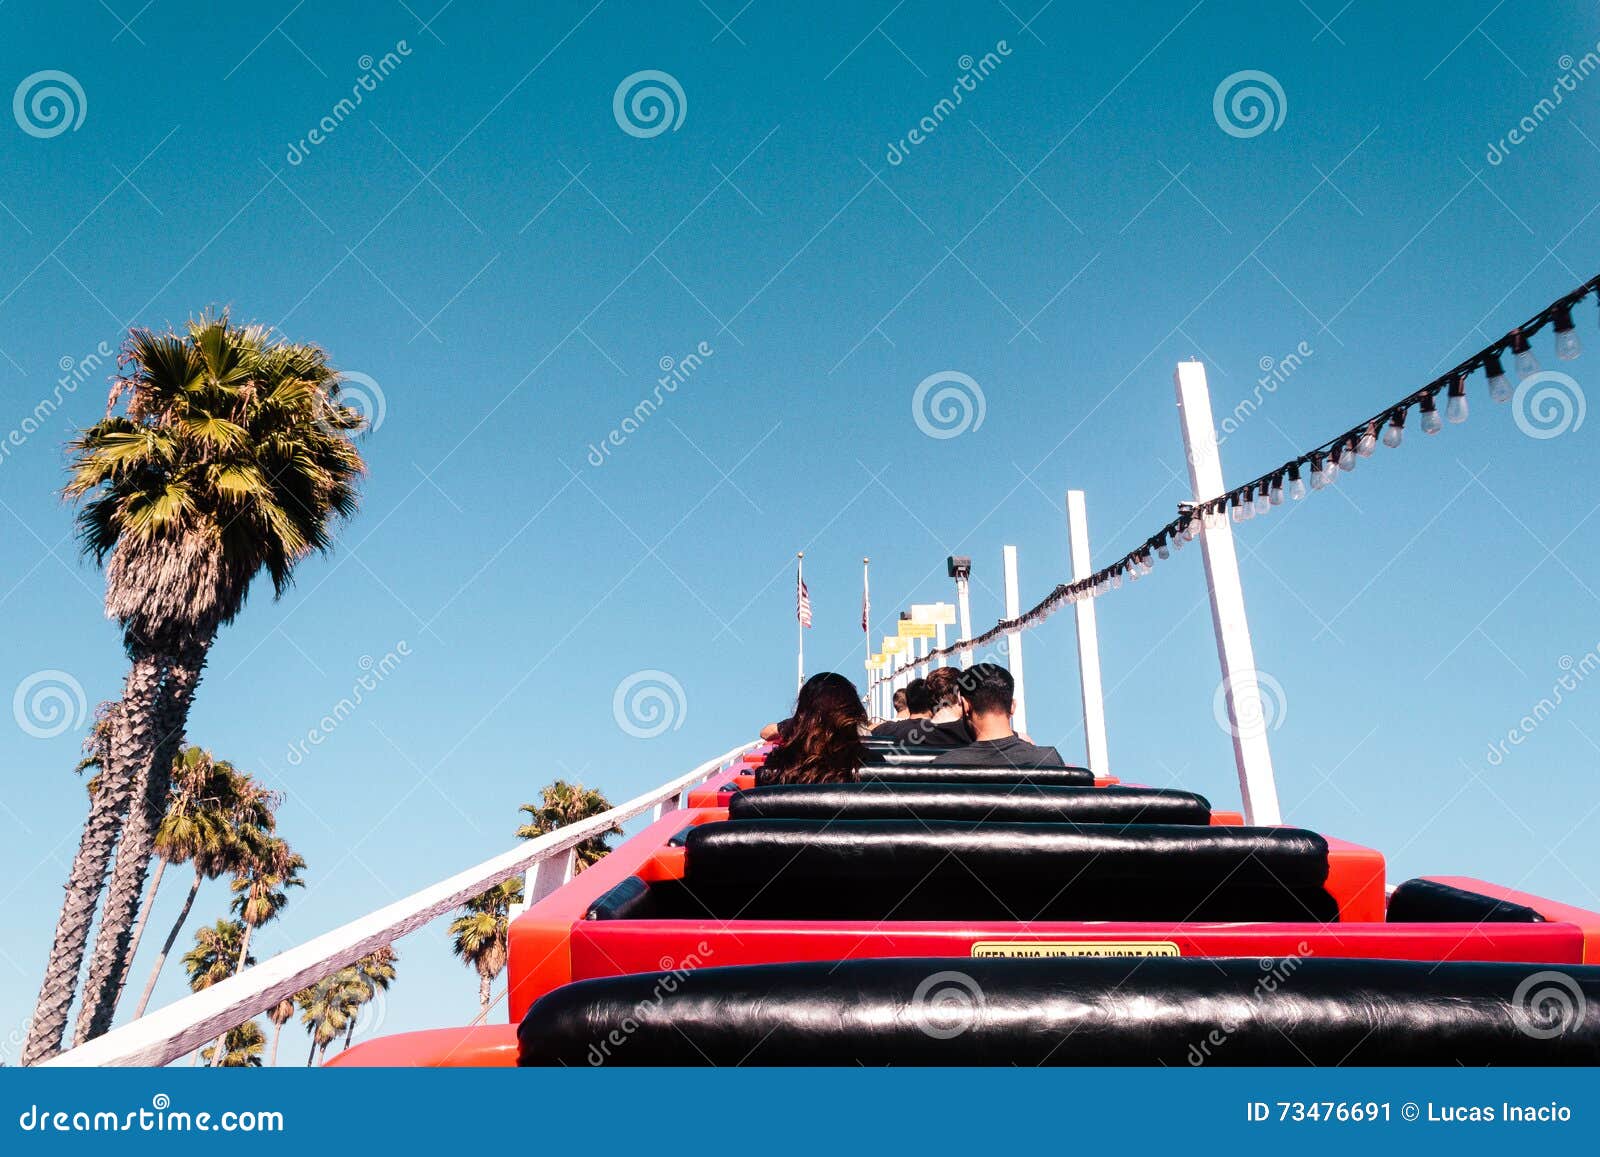 rollercoaster in santa cruz boardwalk, california, united states